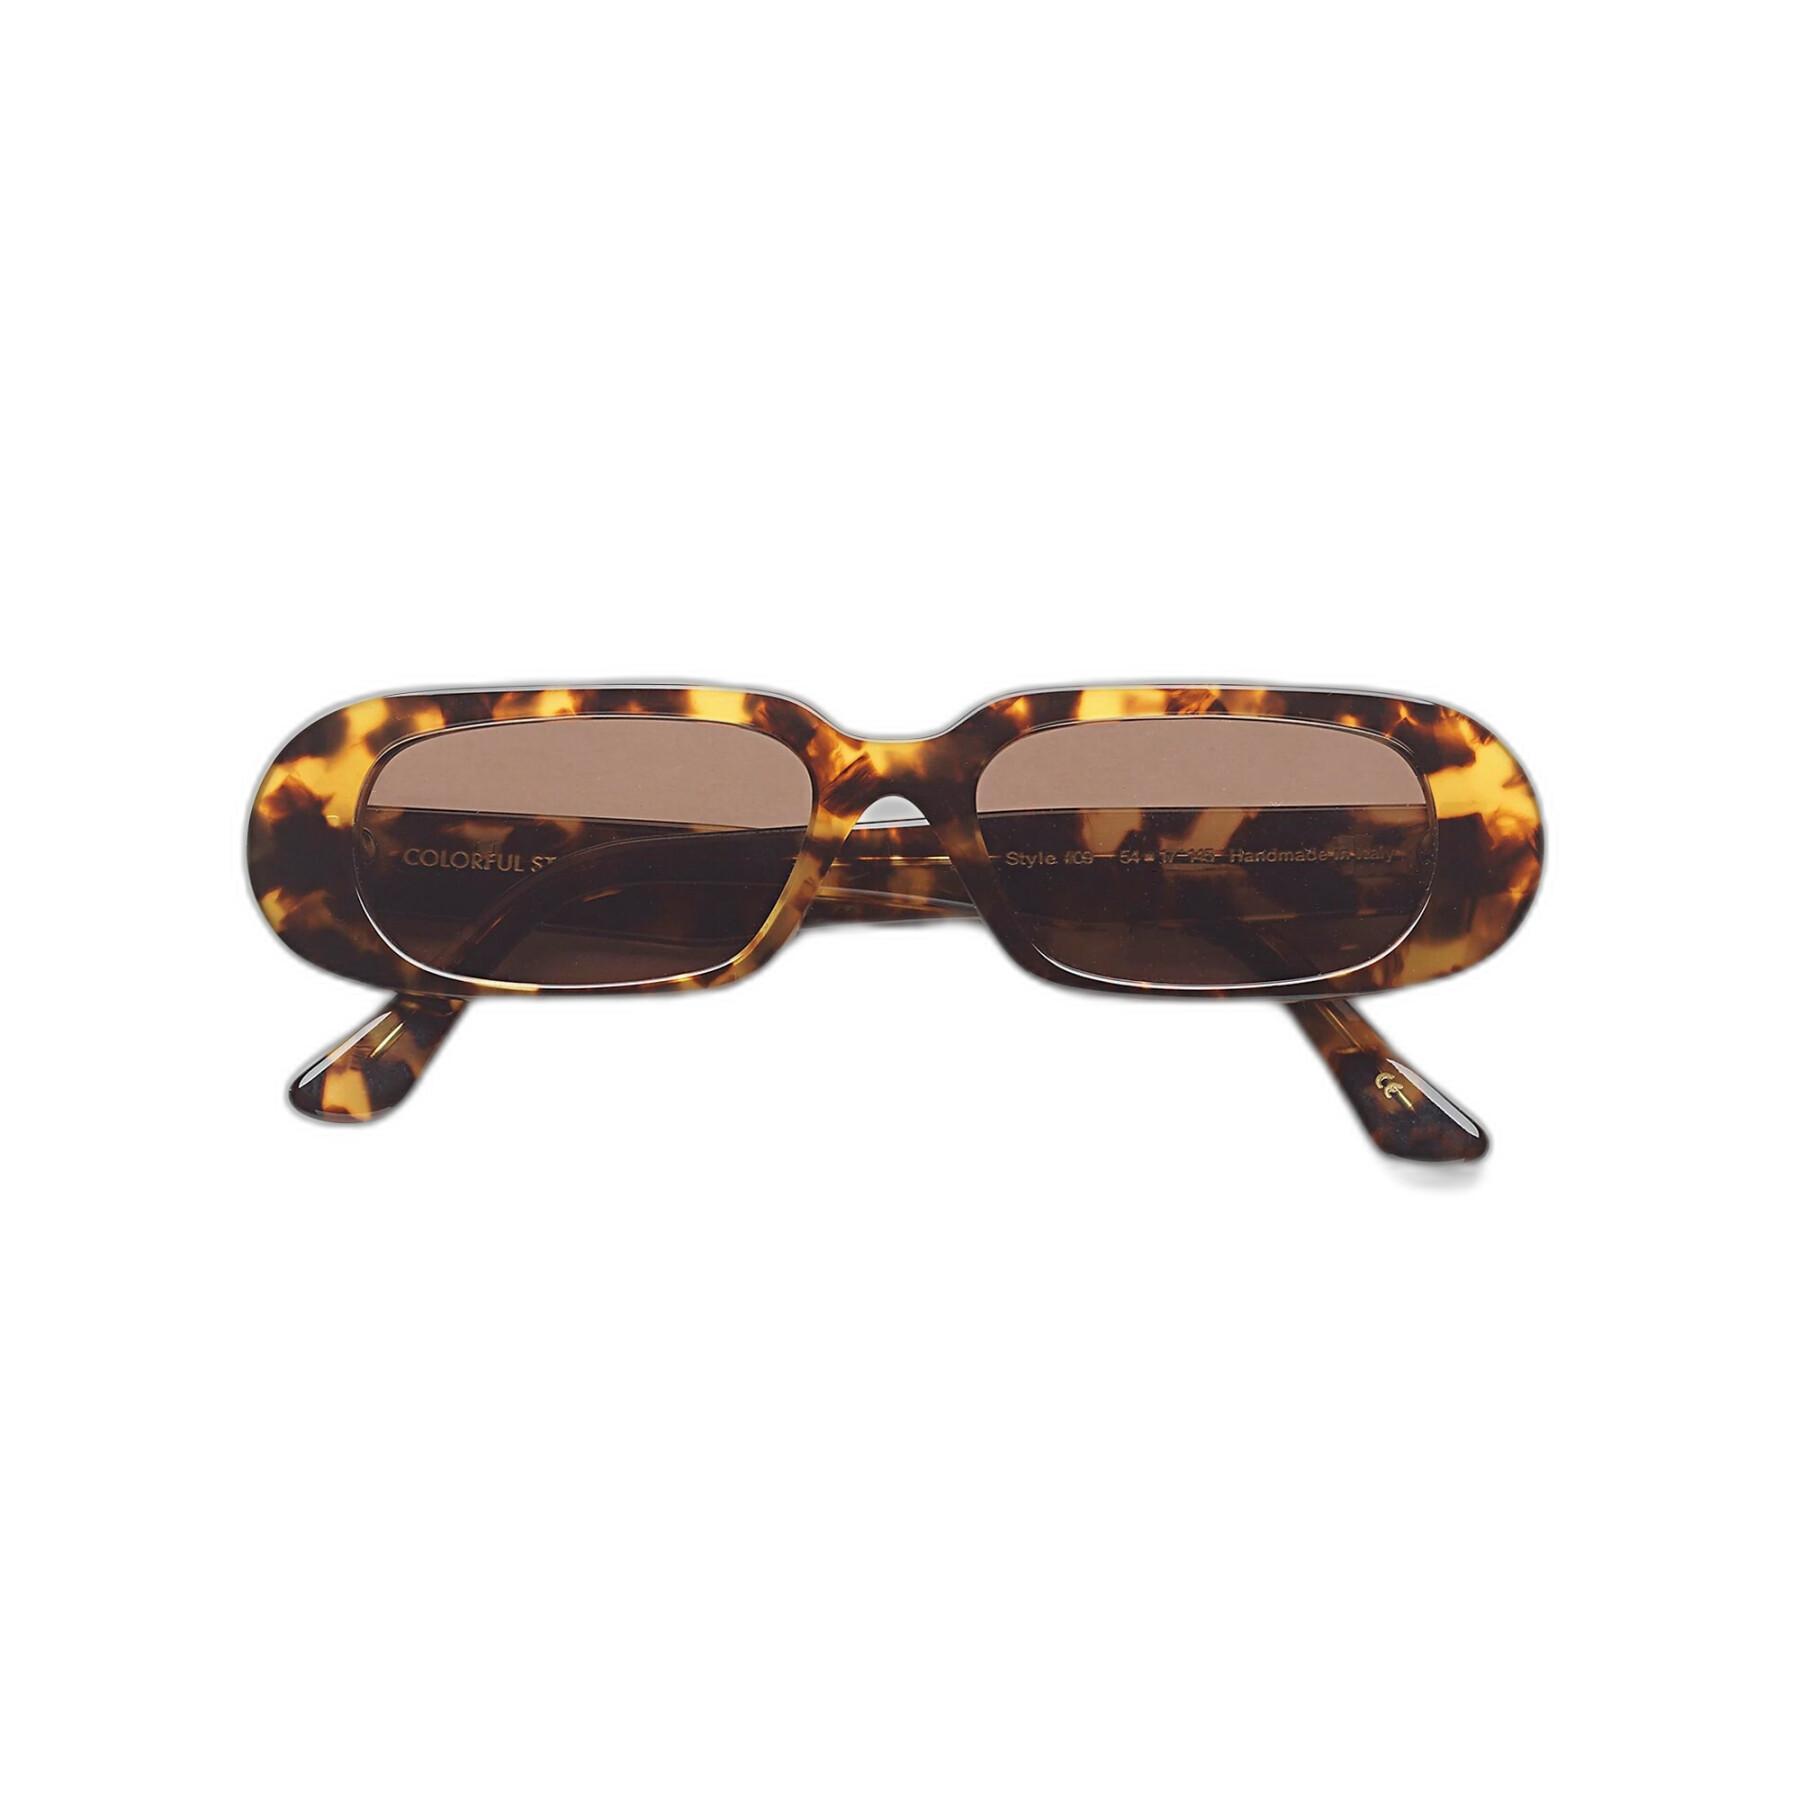 Sunglasses Colorful Standard 09 classic havana/brown